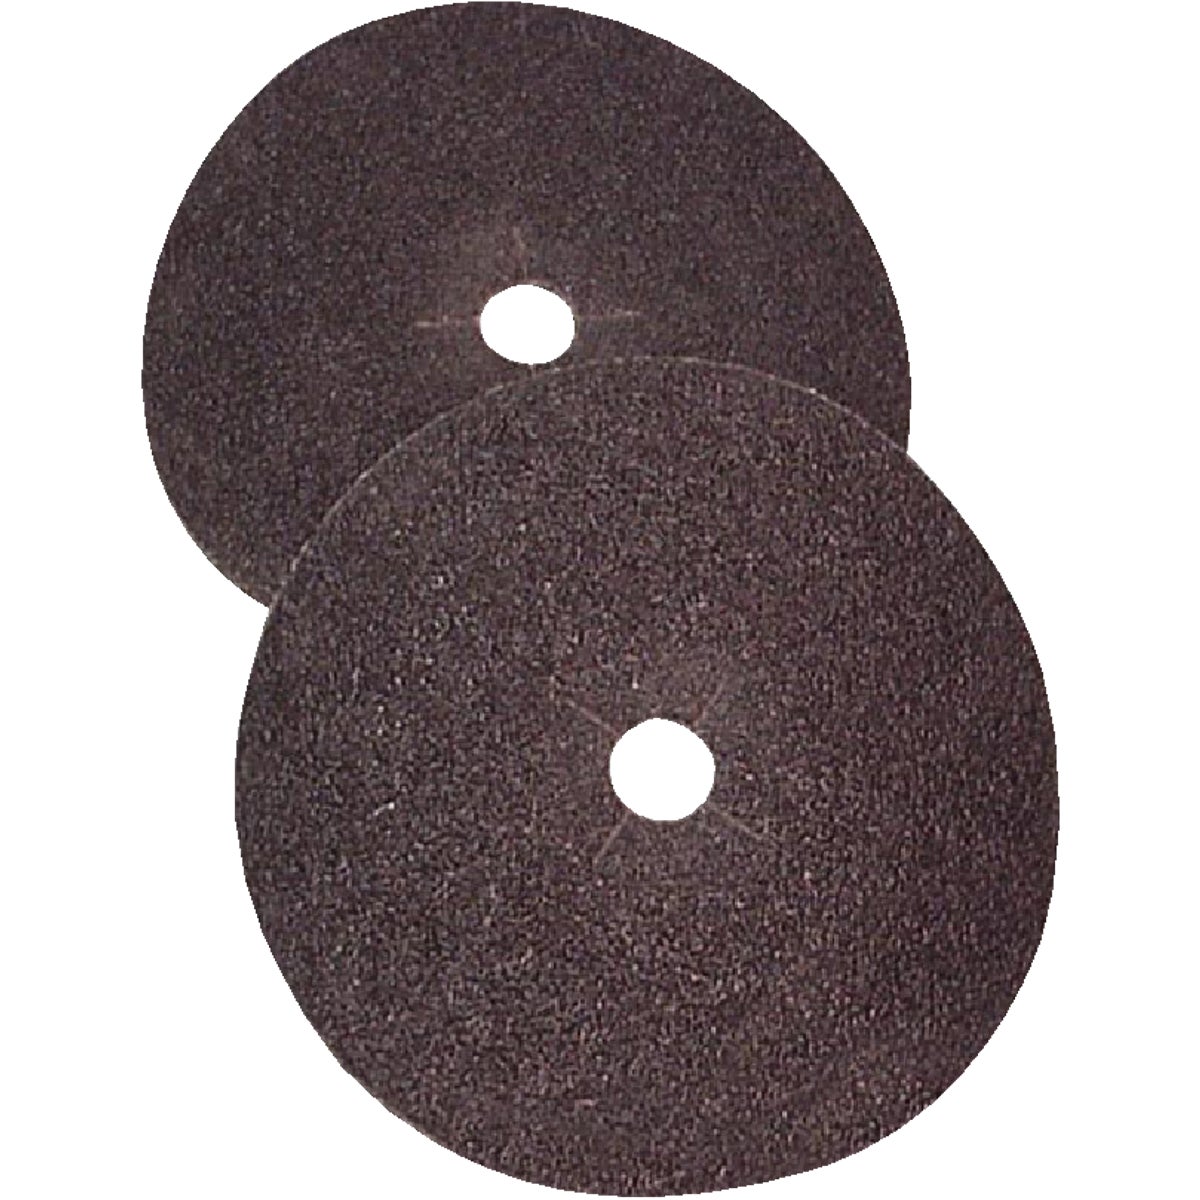 Virginia Abrasives 7 In. x 5/16 In. 60 Grit Floor Sanding Disc